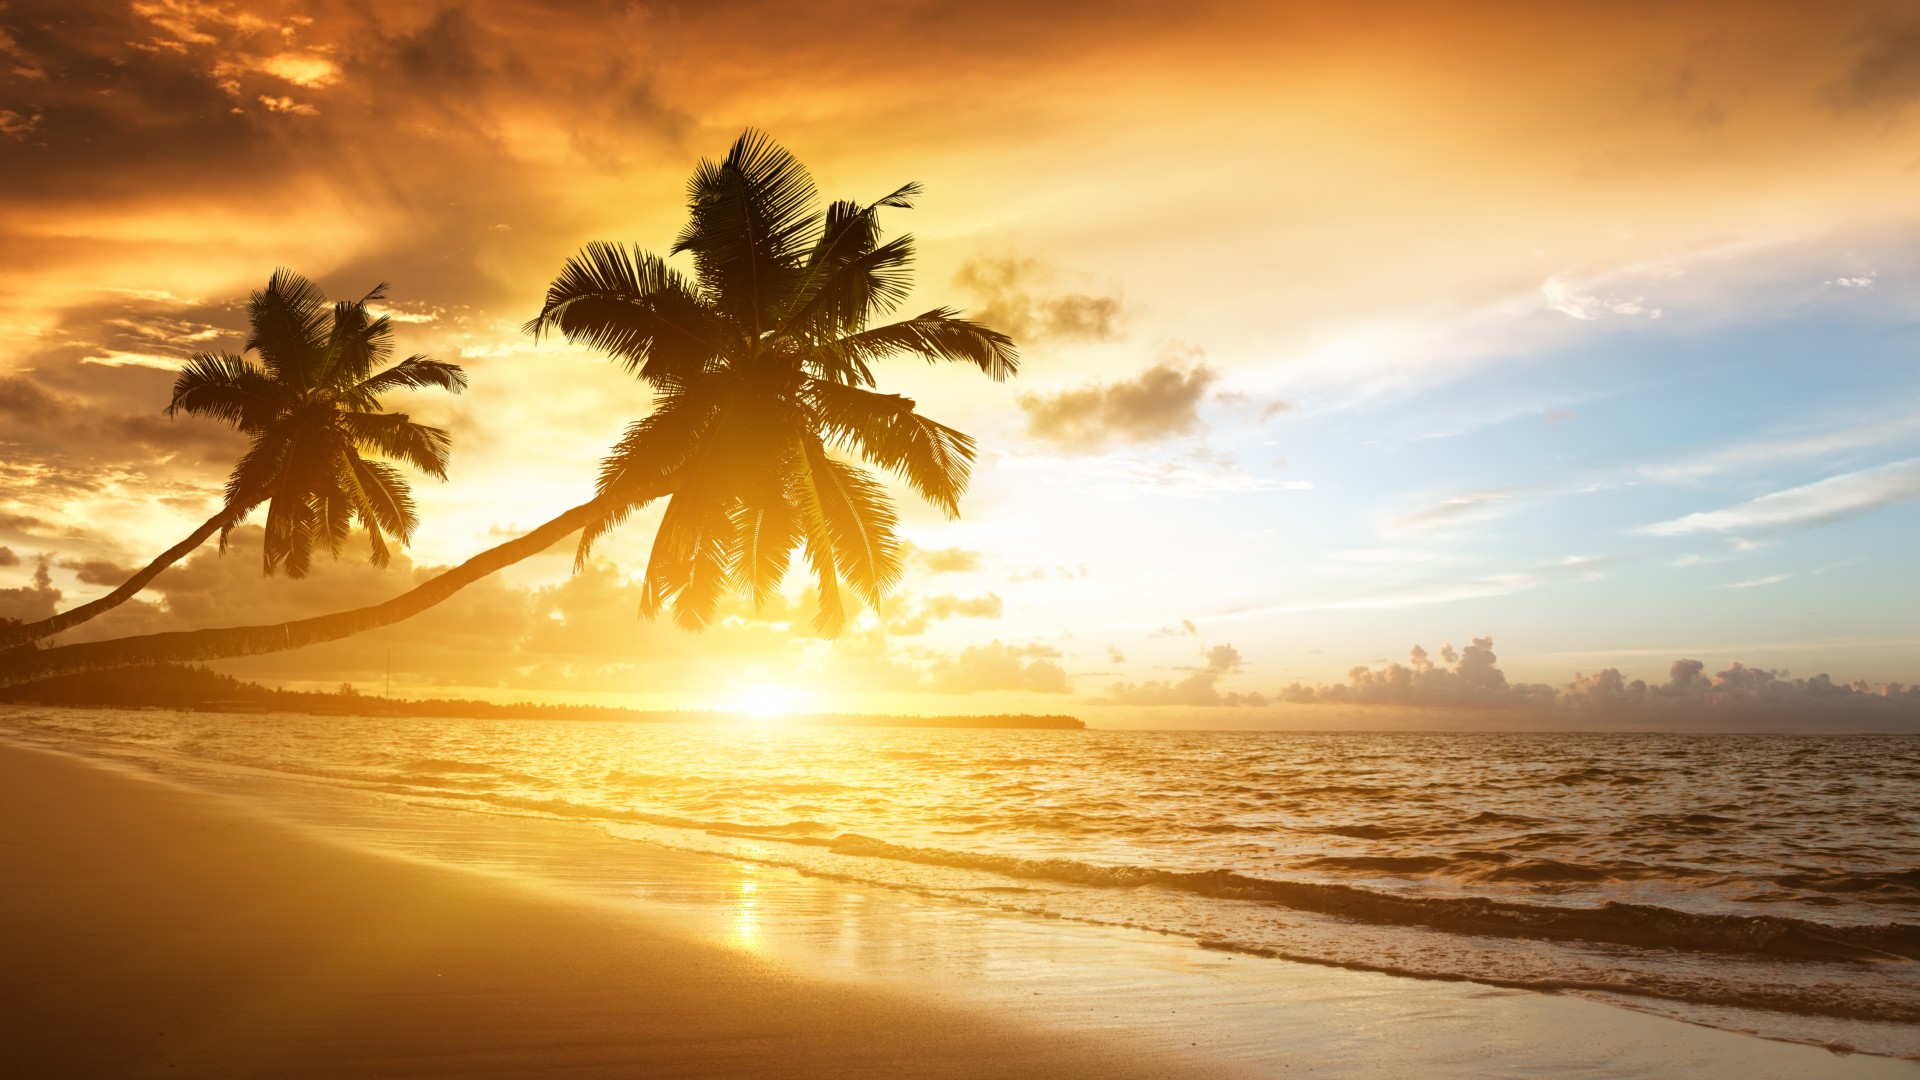 пляж, 5k, 4k, океан, закат, пальмы, отдых, отпуск, путишествие, beach, 5k, 4k wallpaper, ocean, sunset, palm trees, vacation, journey (horizontal)